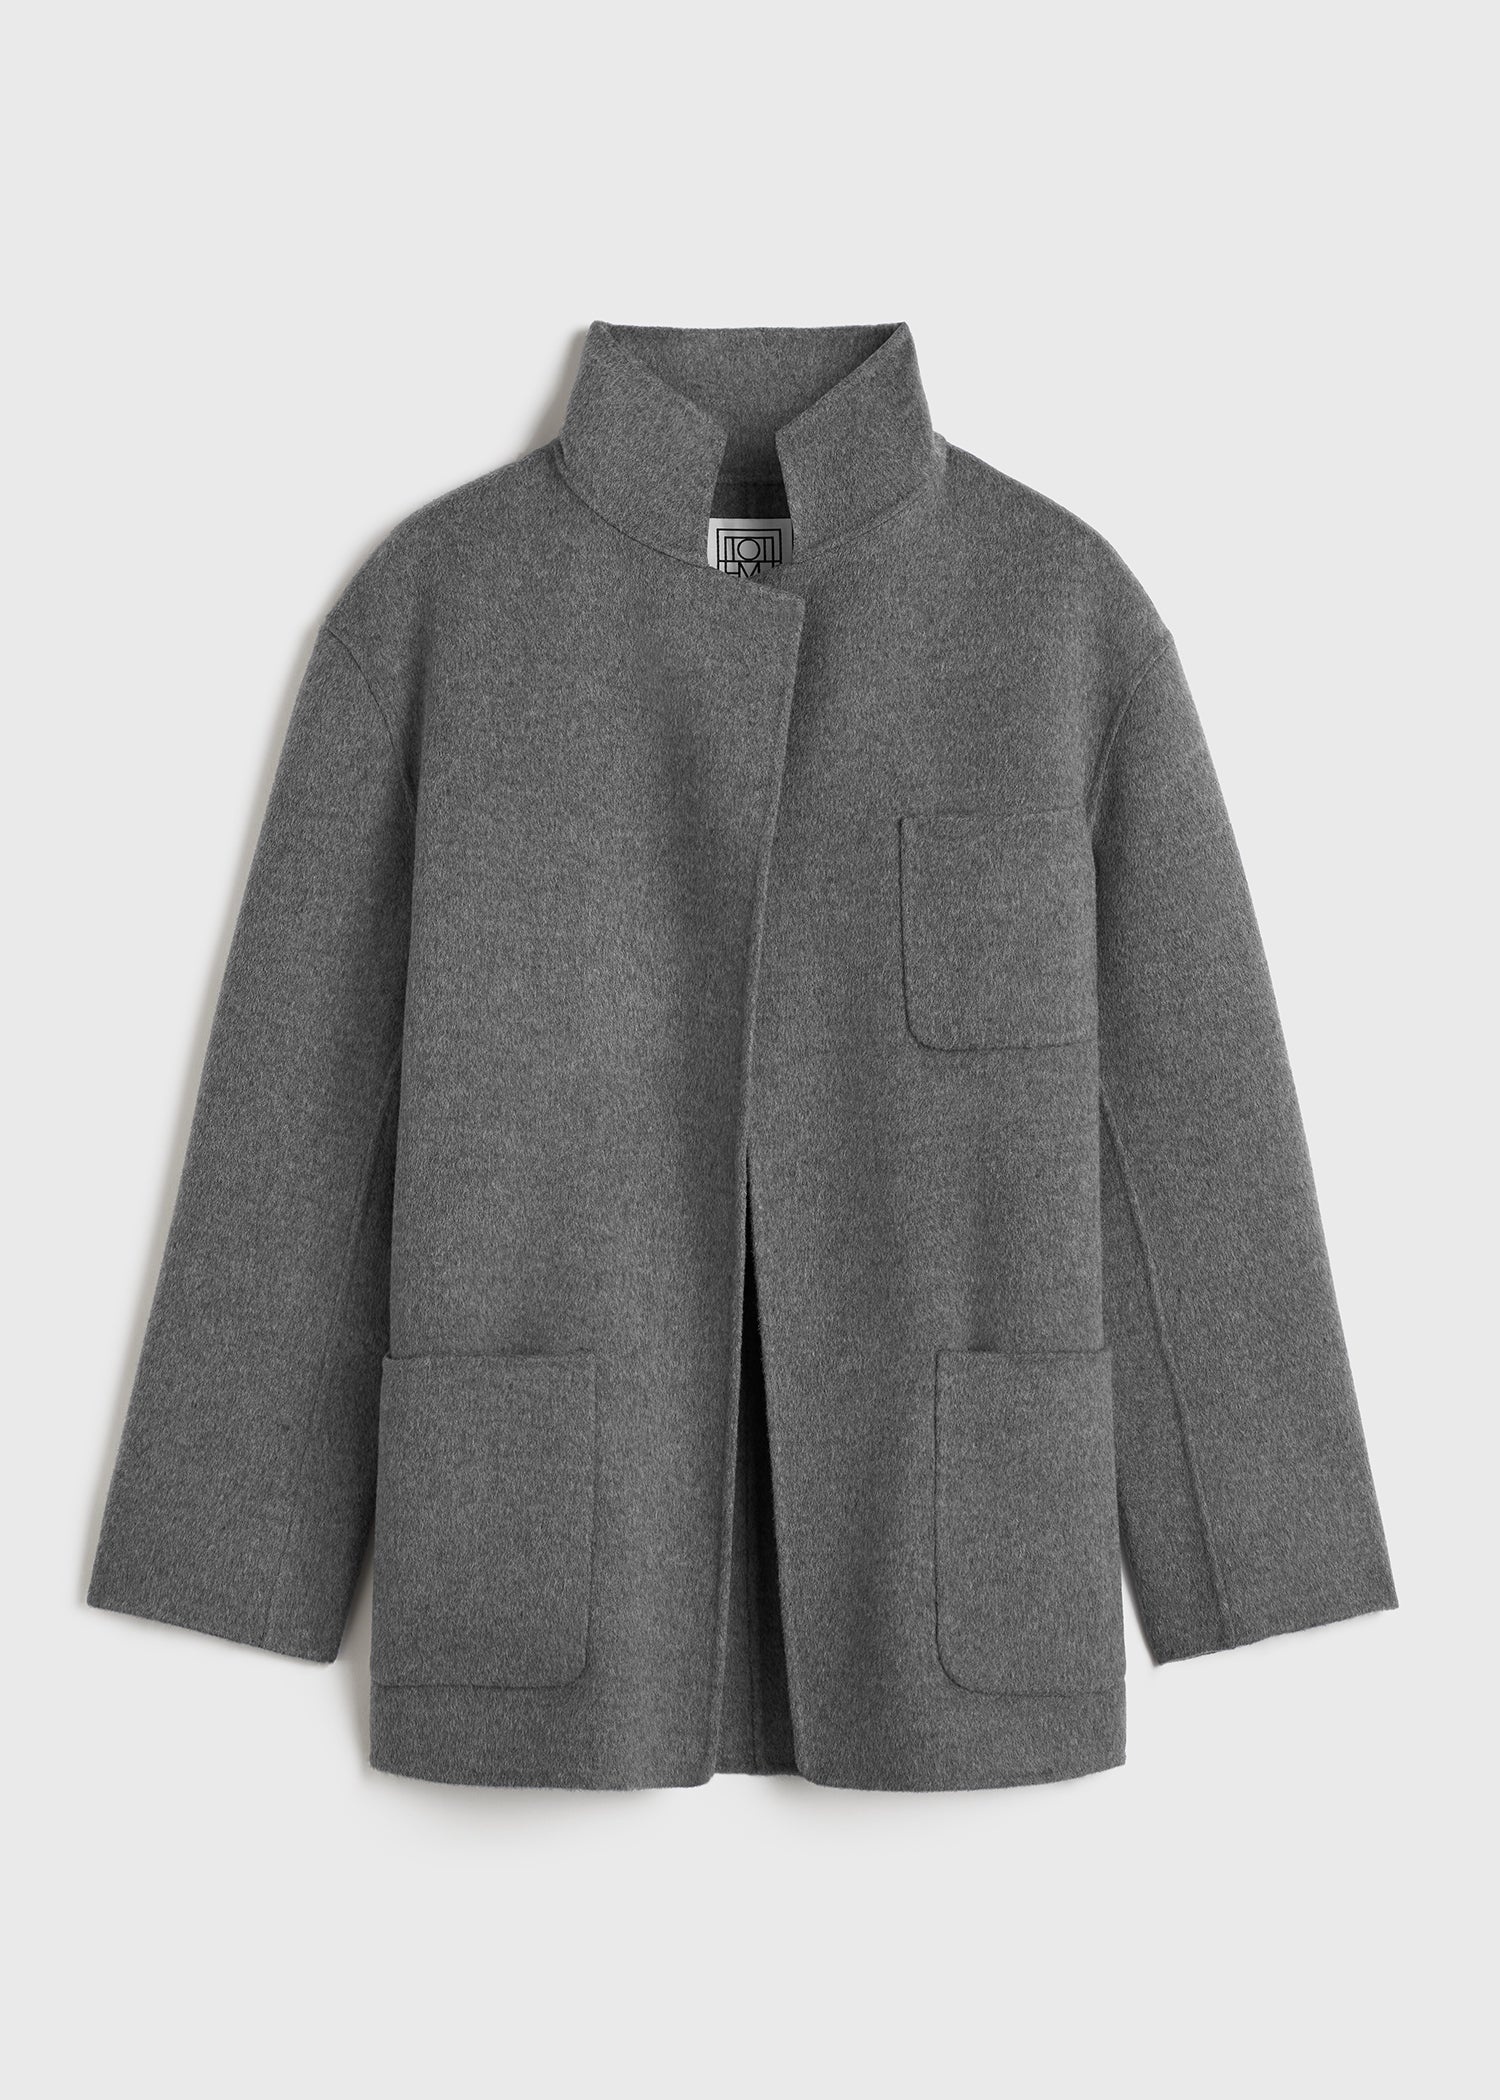 Patch pocket doublé jacket pale grey melange - 1